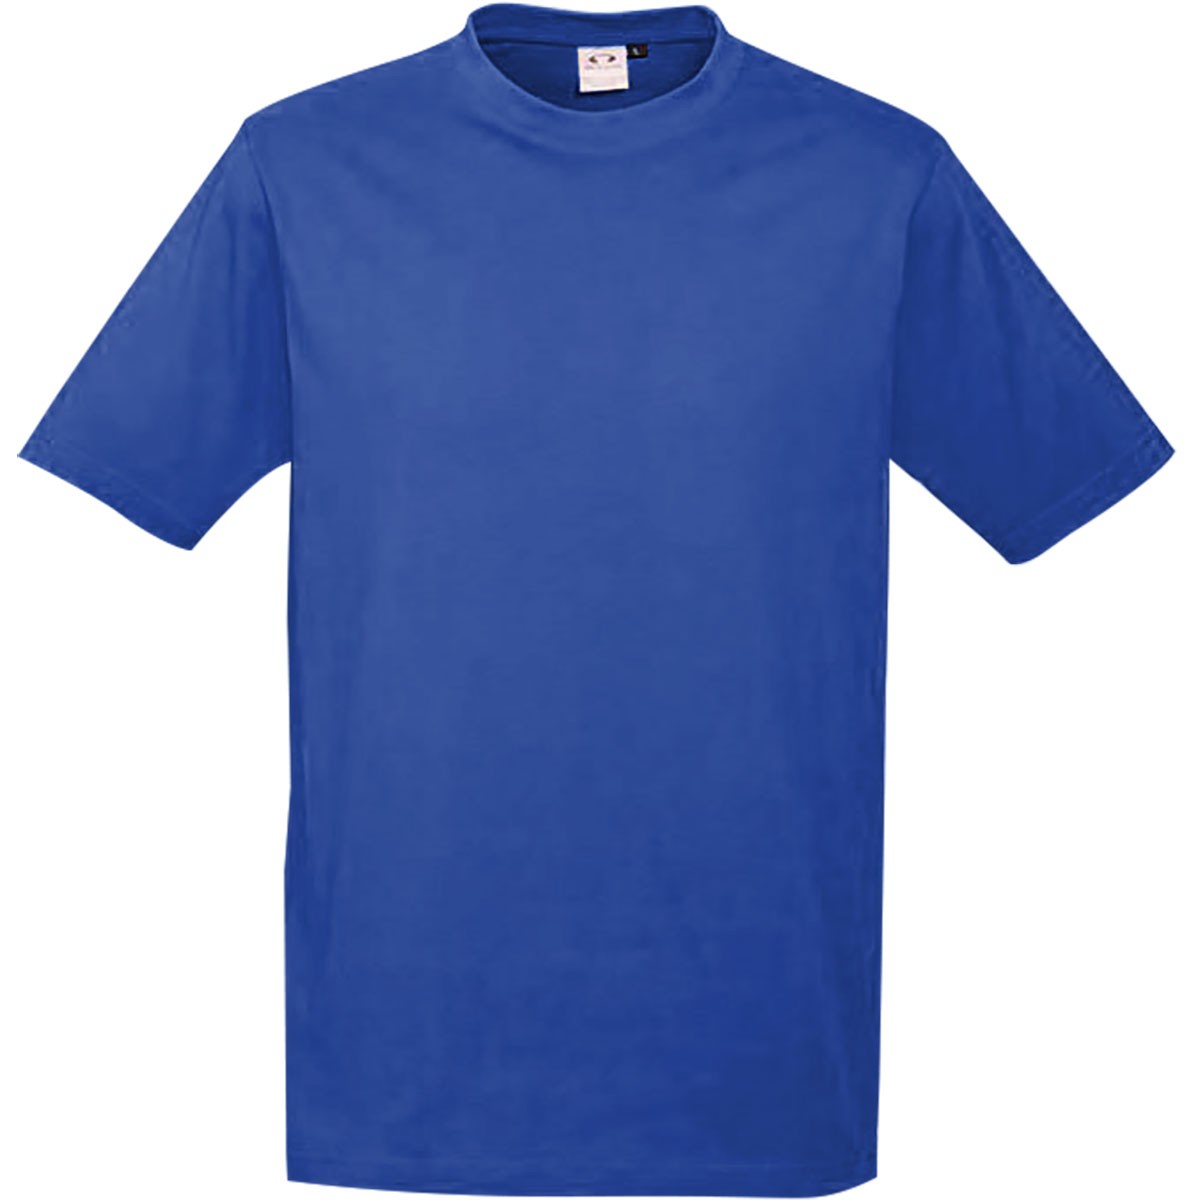 Biz Collection T-Shirt Royal Blue - School Locker